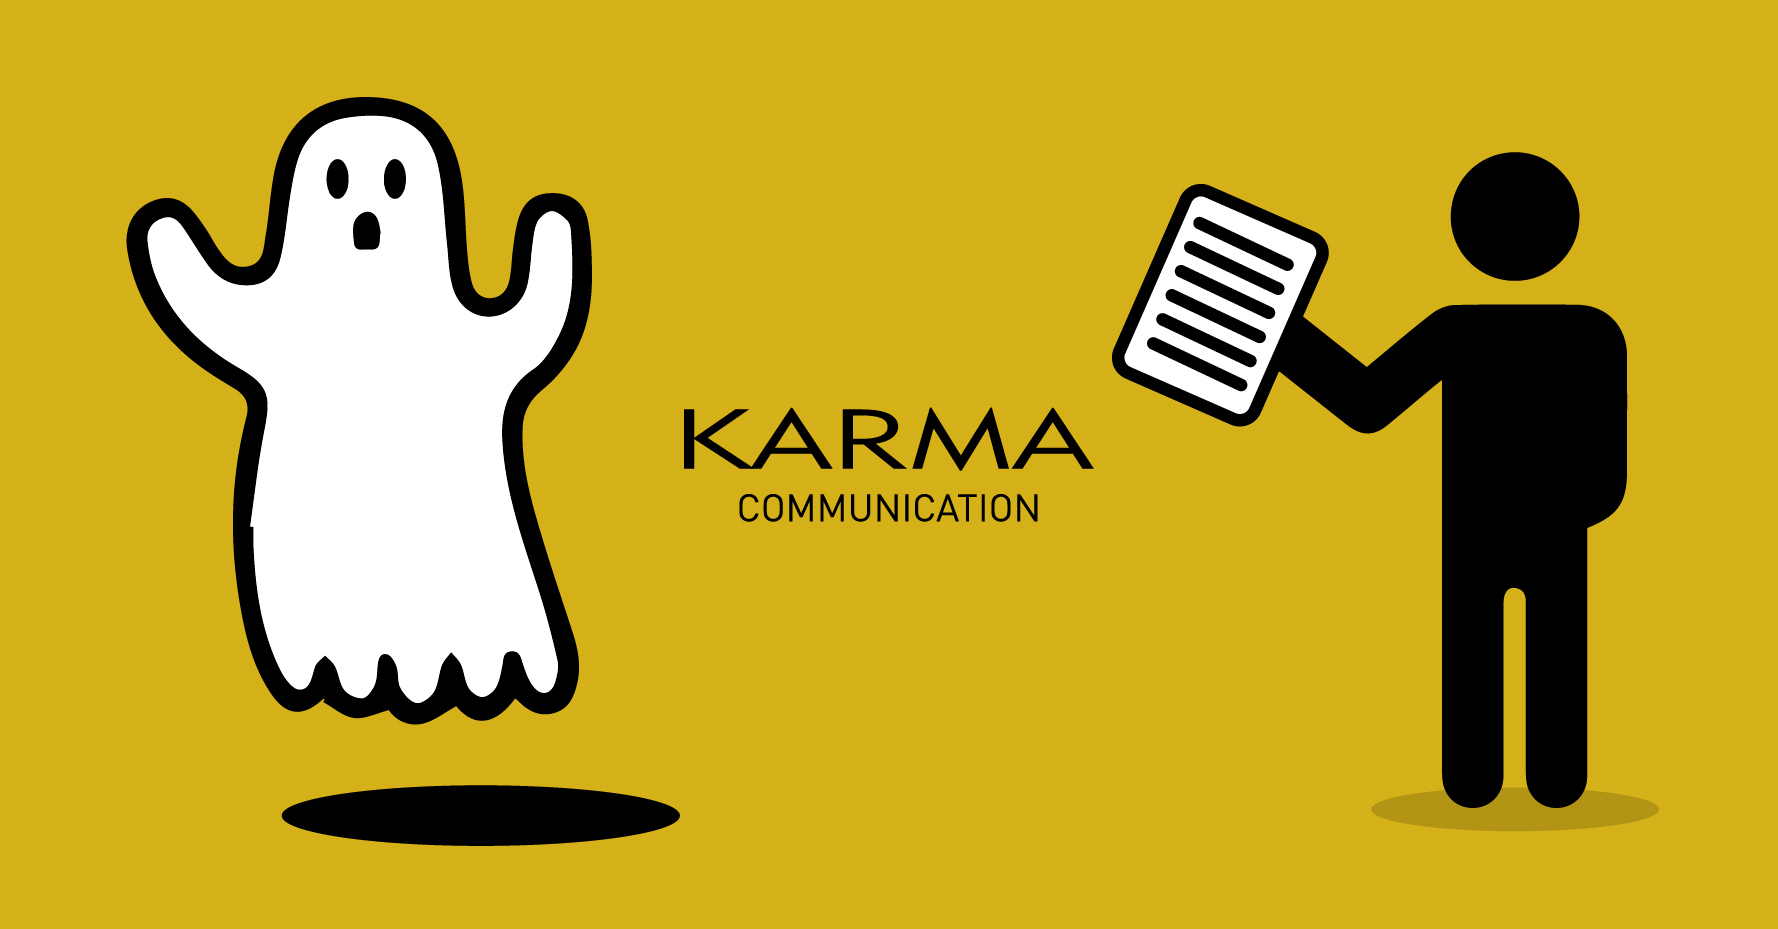 Karma Communication - Preventivo genera fantasmi